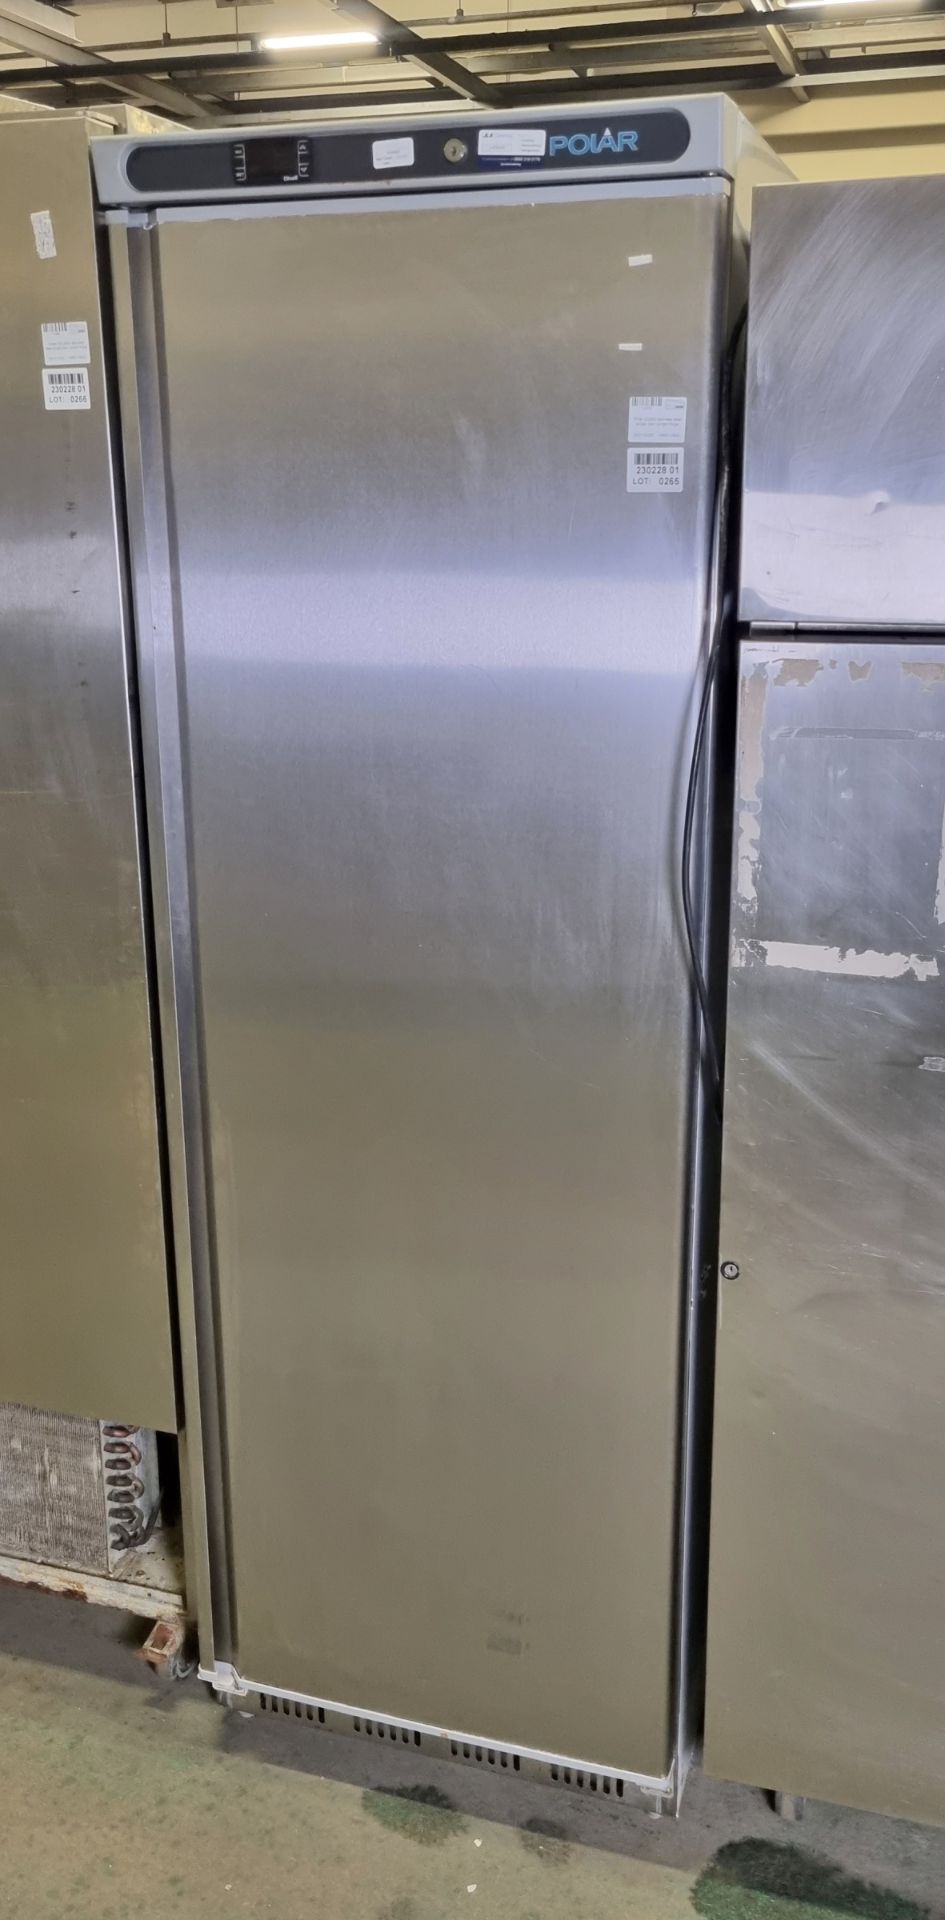 Polar CD082 stainless steel single door upright fridge - Image 2 of 4